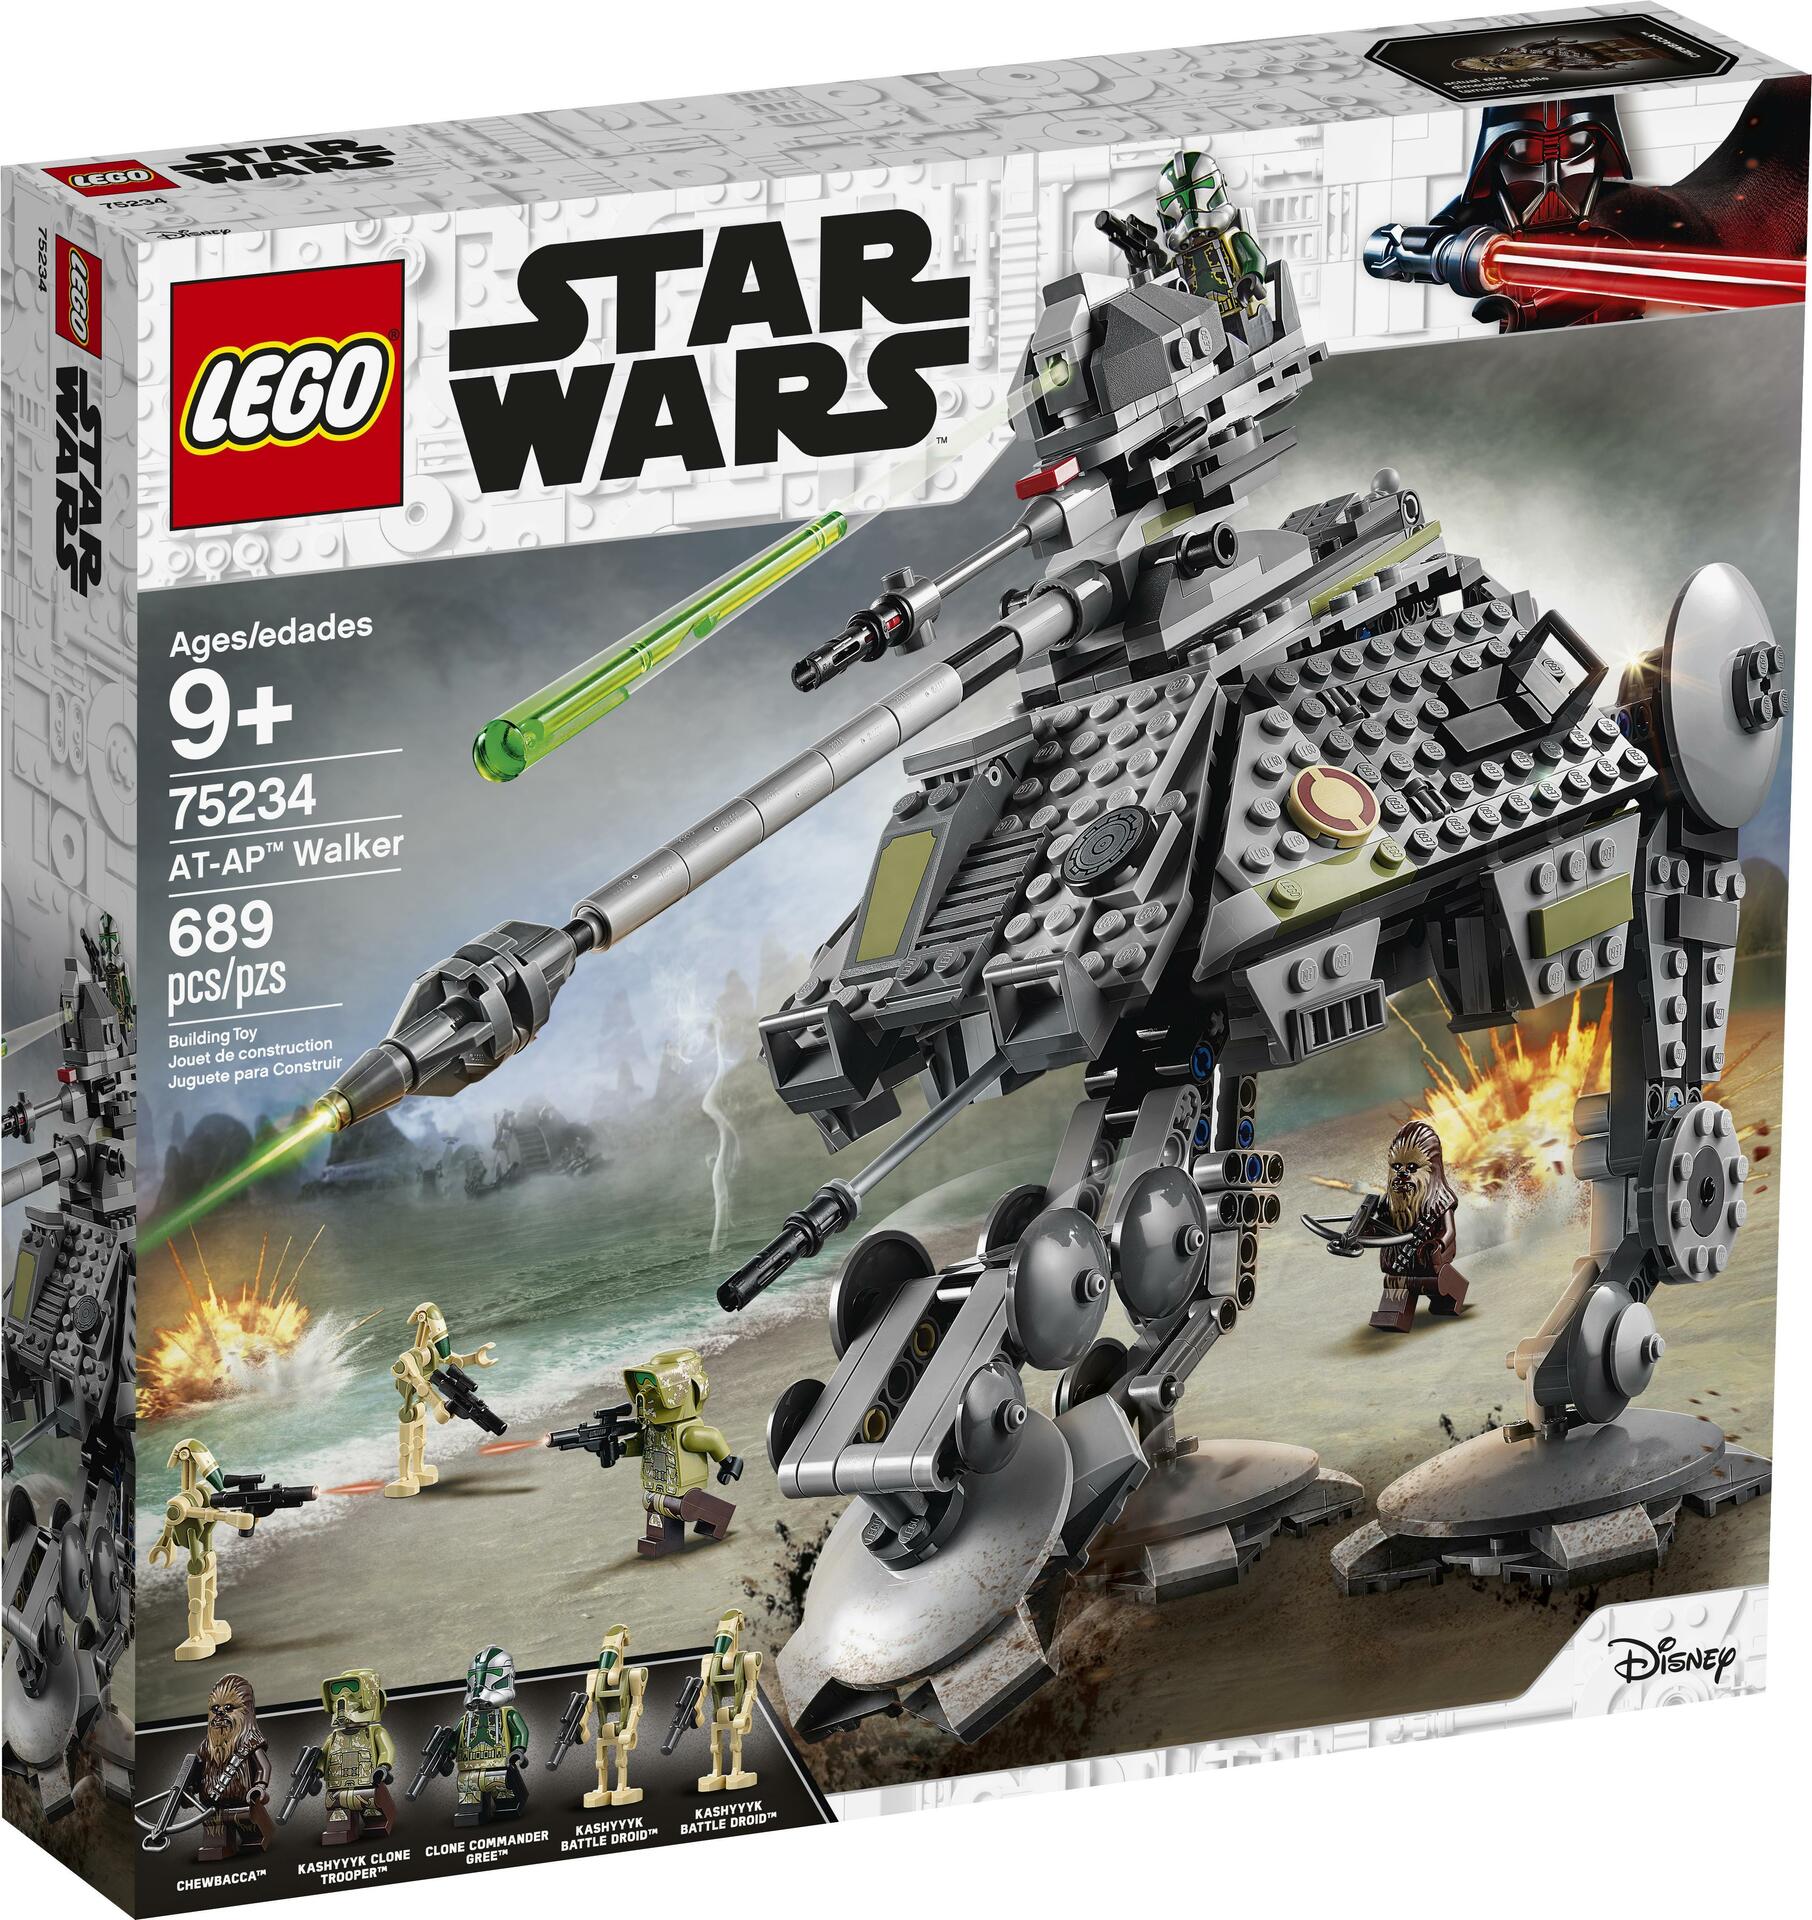 LEGO Star Wars 75234 AT-AP Walker (75234)